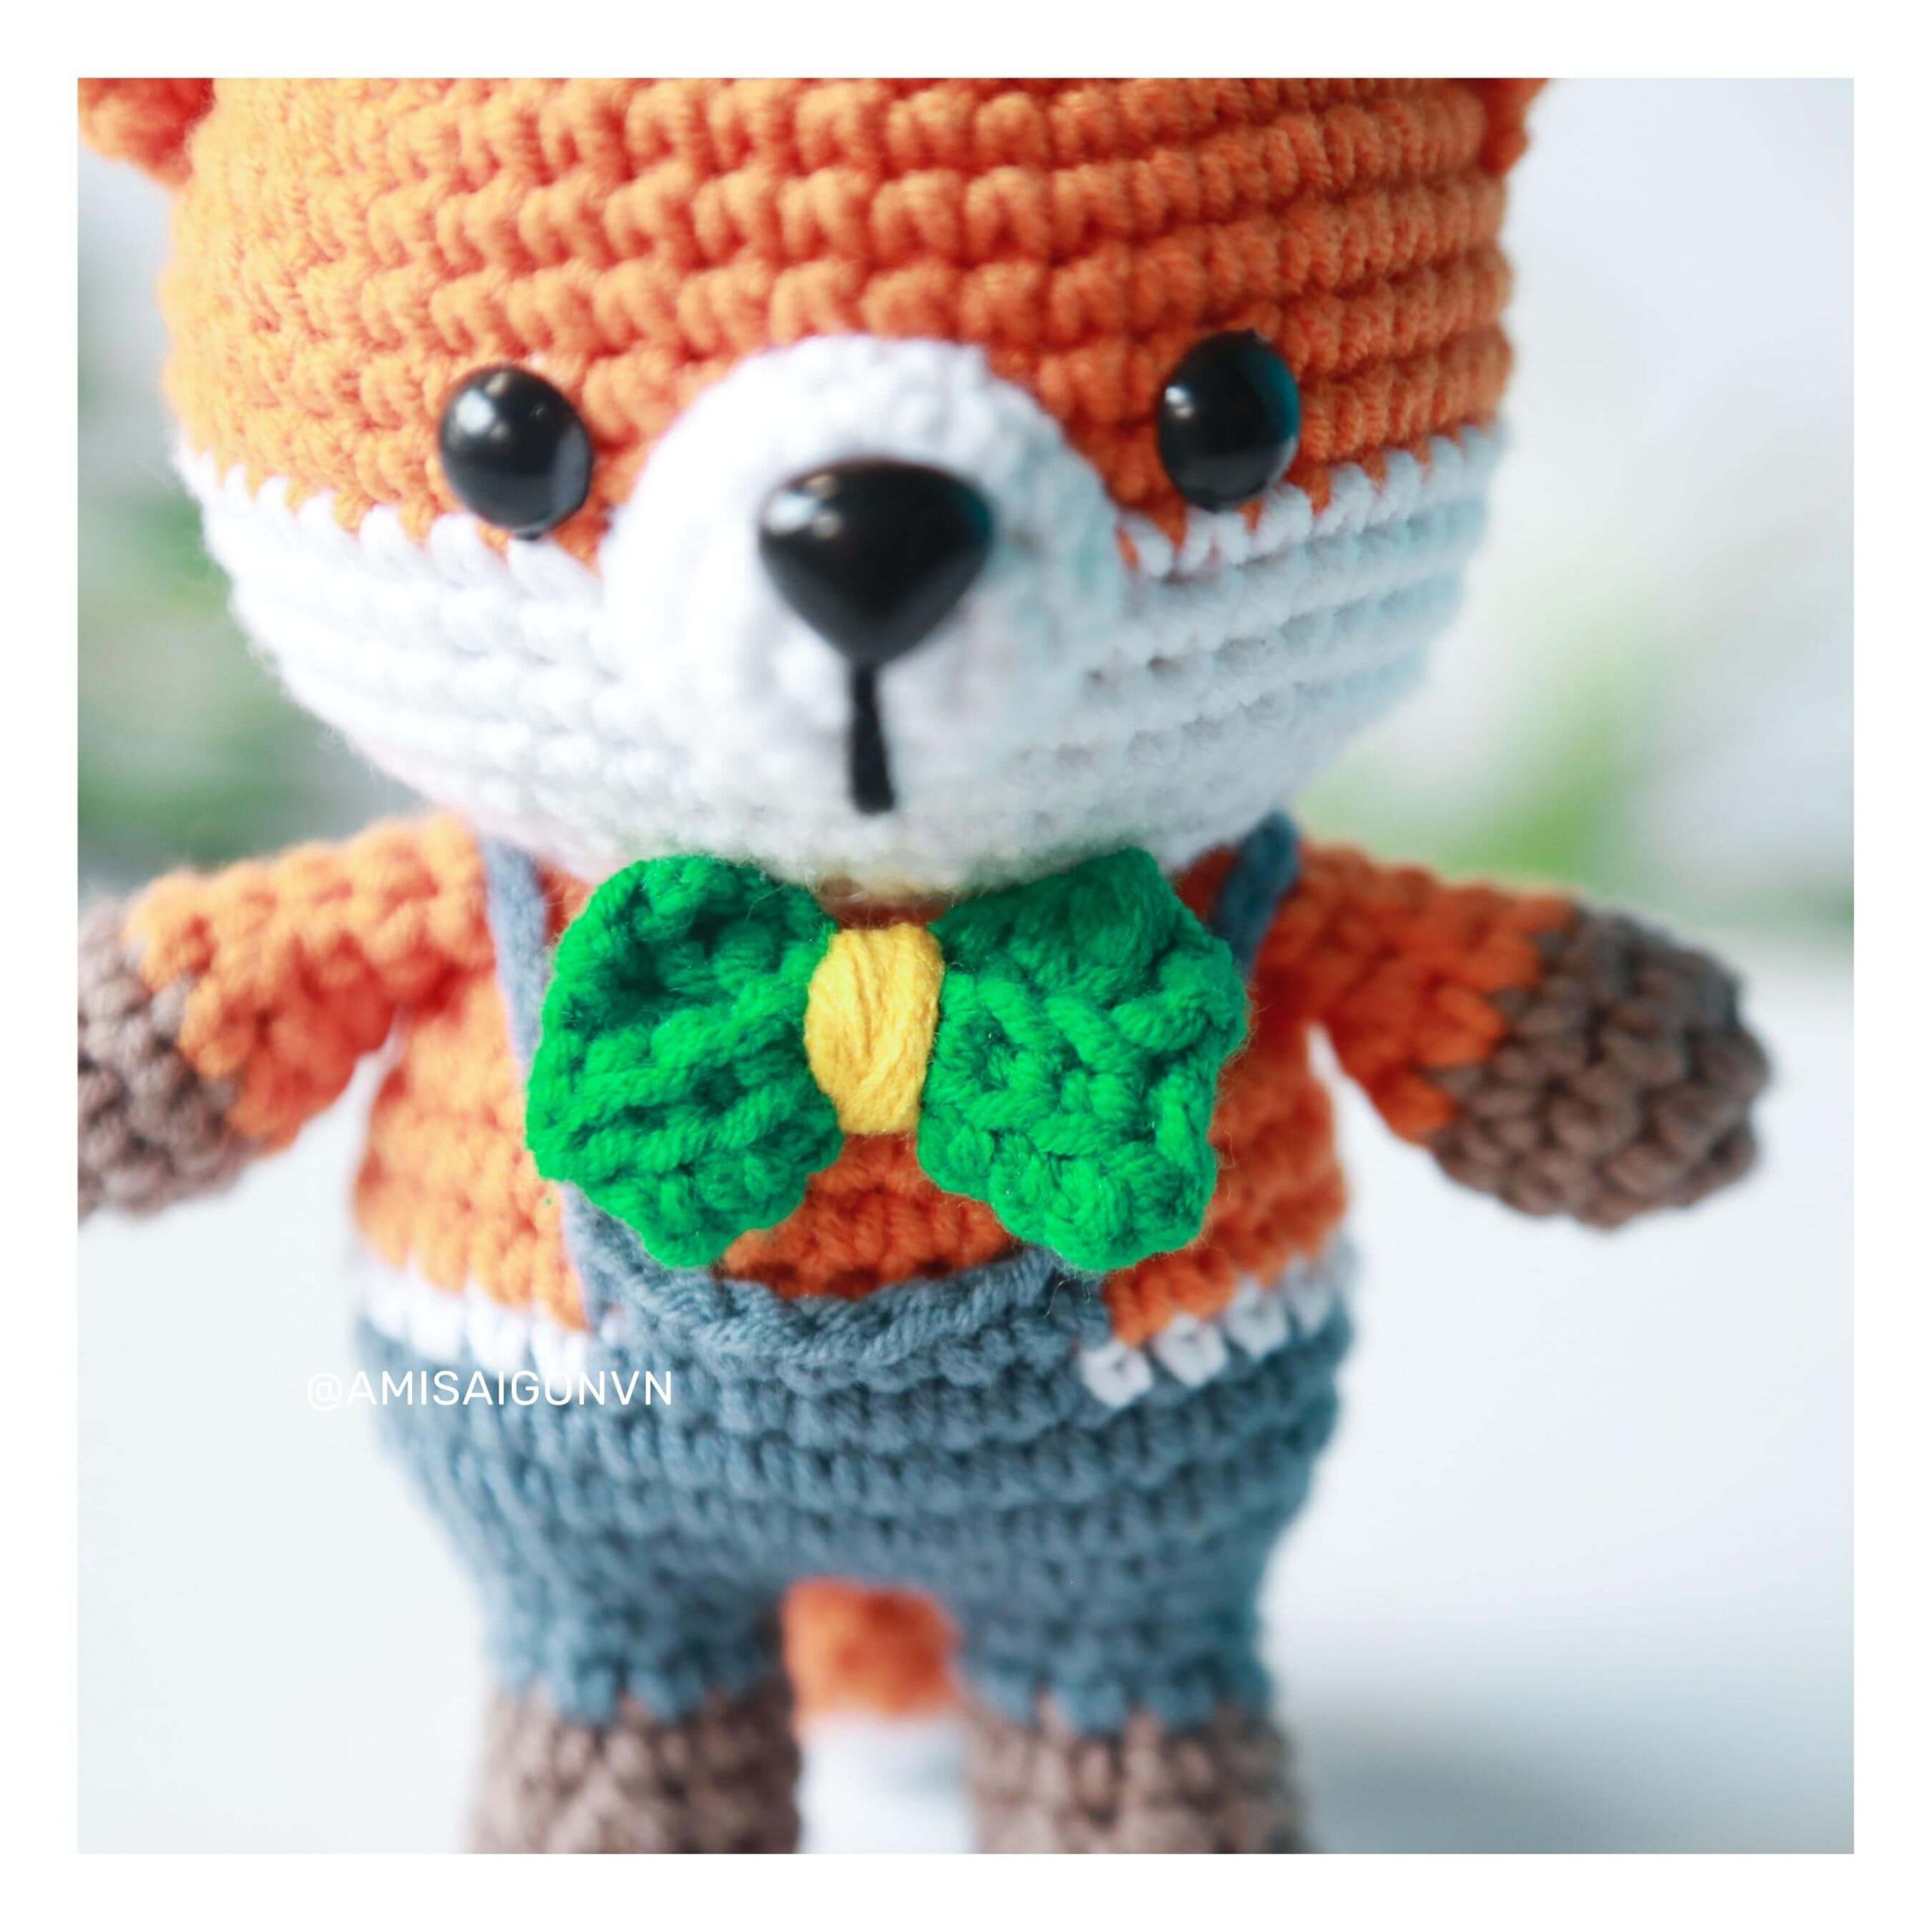 Fox-amigurumi-crochet-pattern-amisaigon (7)